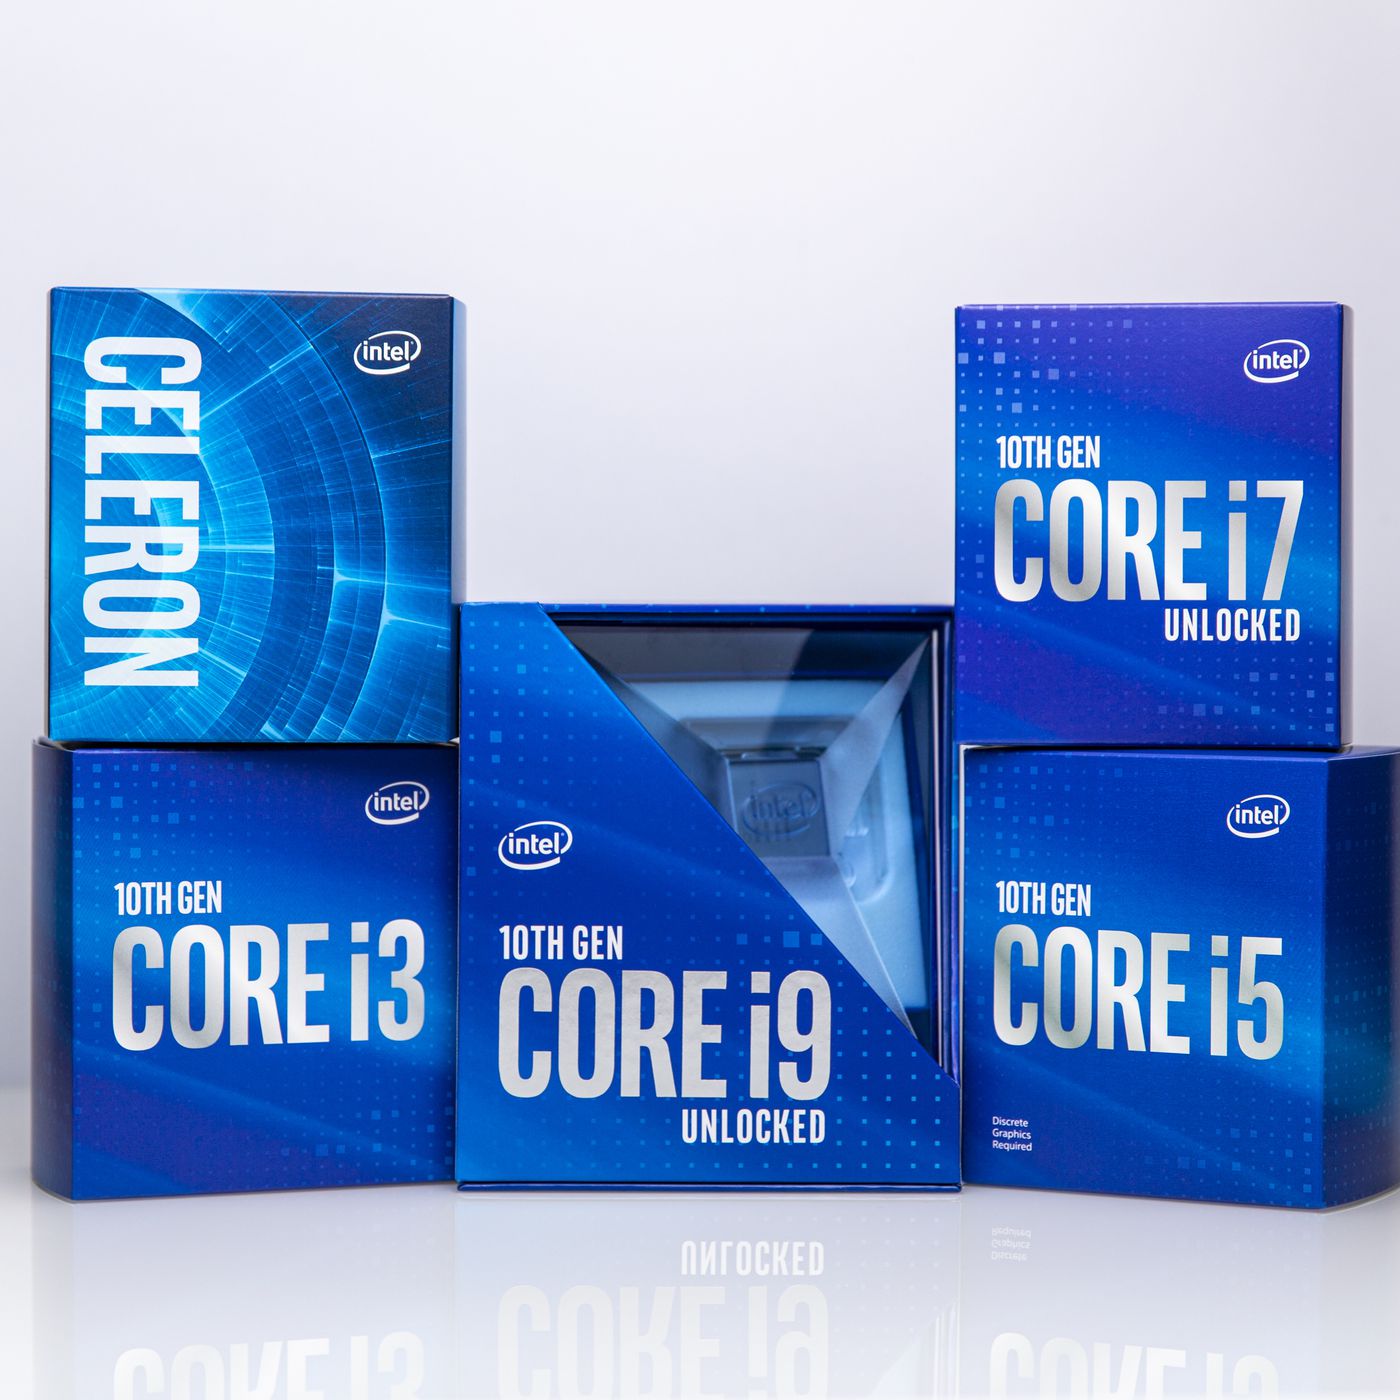 gordijn Tutor Nauwkeurigheid Intel says its new 10th Gen desktop lineup offers 'the world's fastest  gaming processor' - The Verge